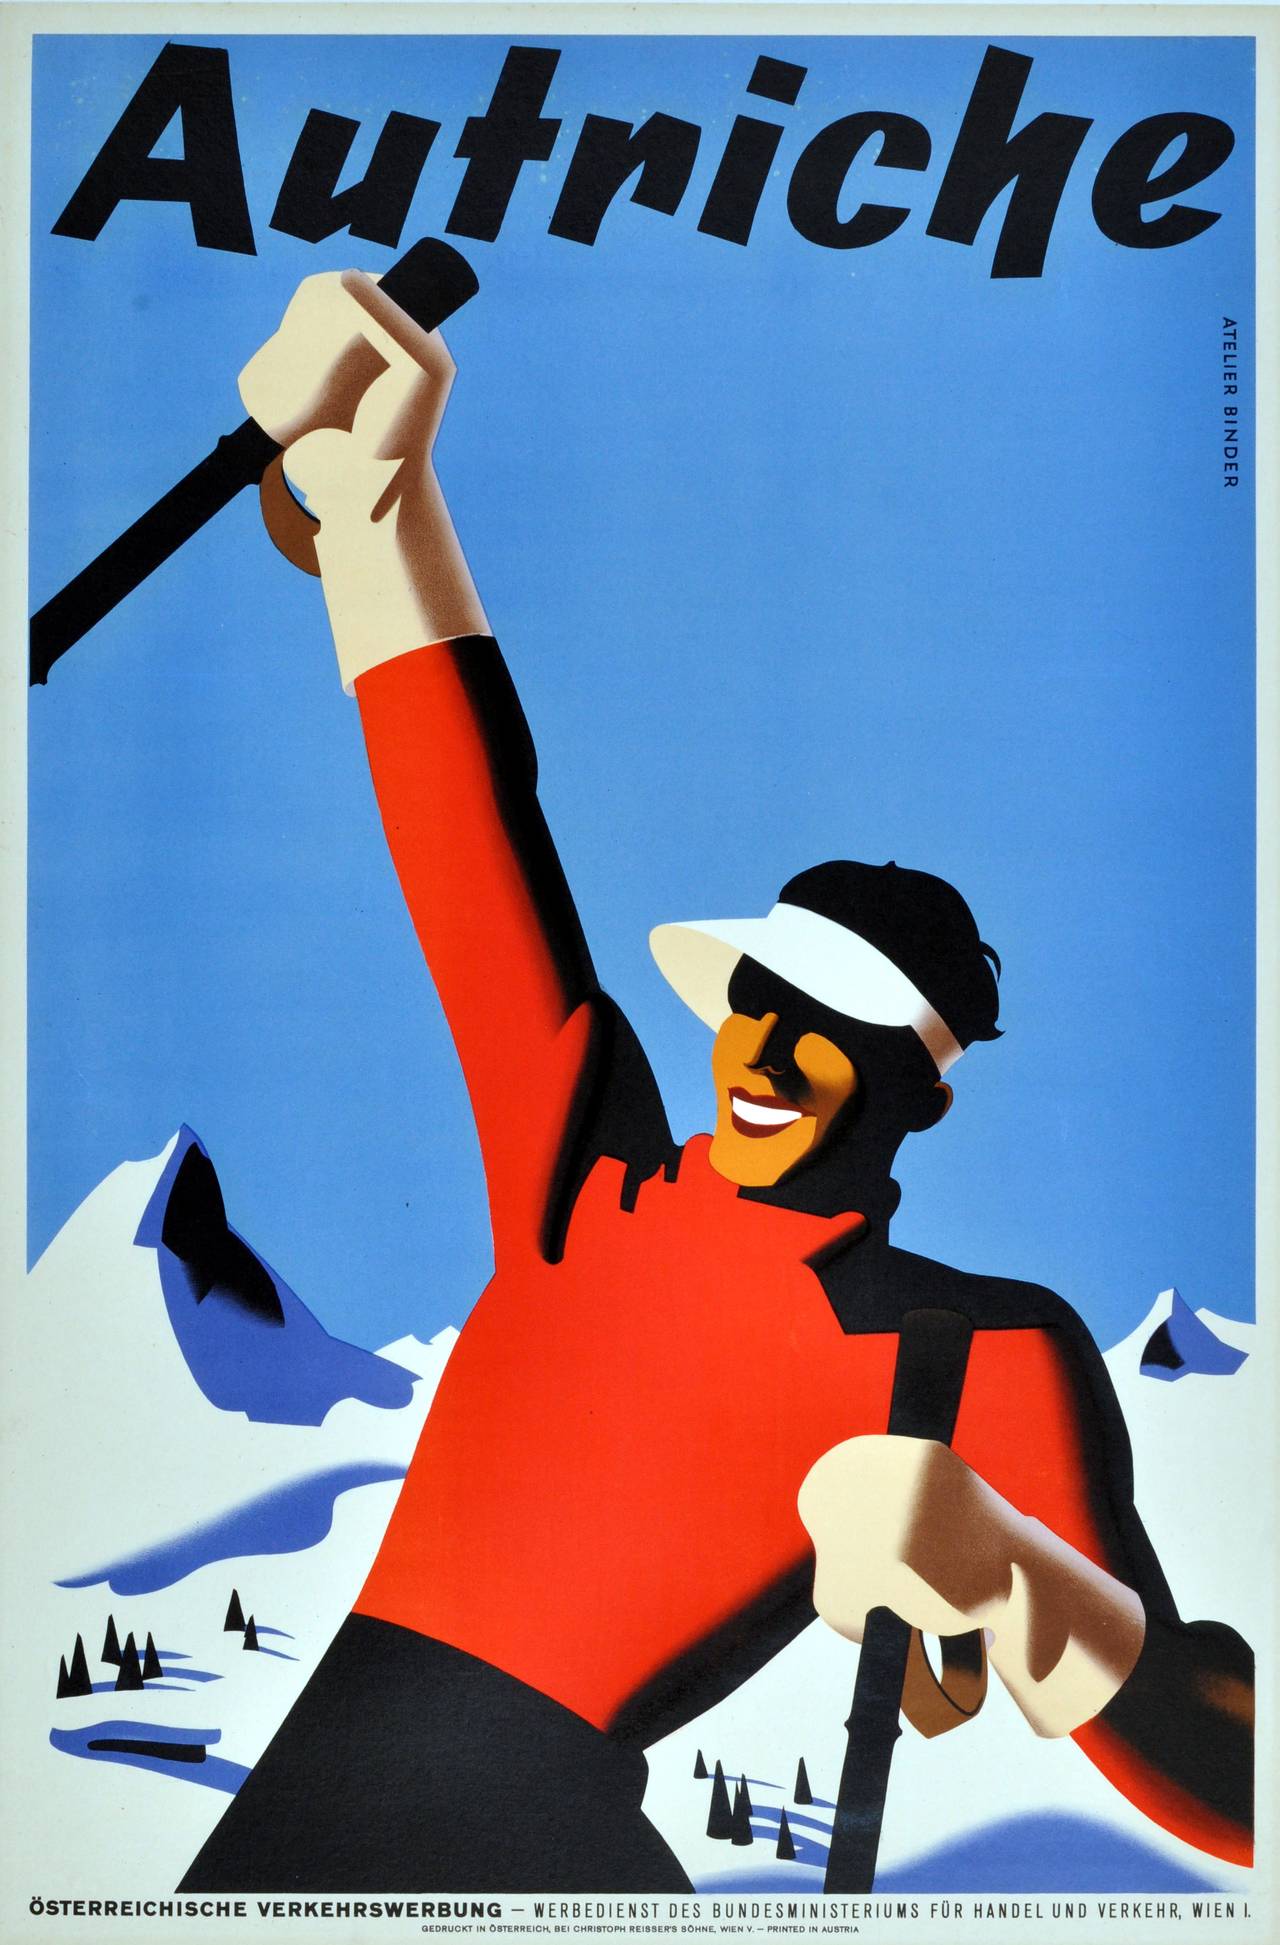 Atelier Binder Print - Original Vintage Winter Sport Skiing Poster For Autriche Austria Skier Mountains